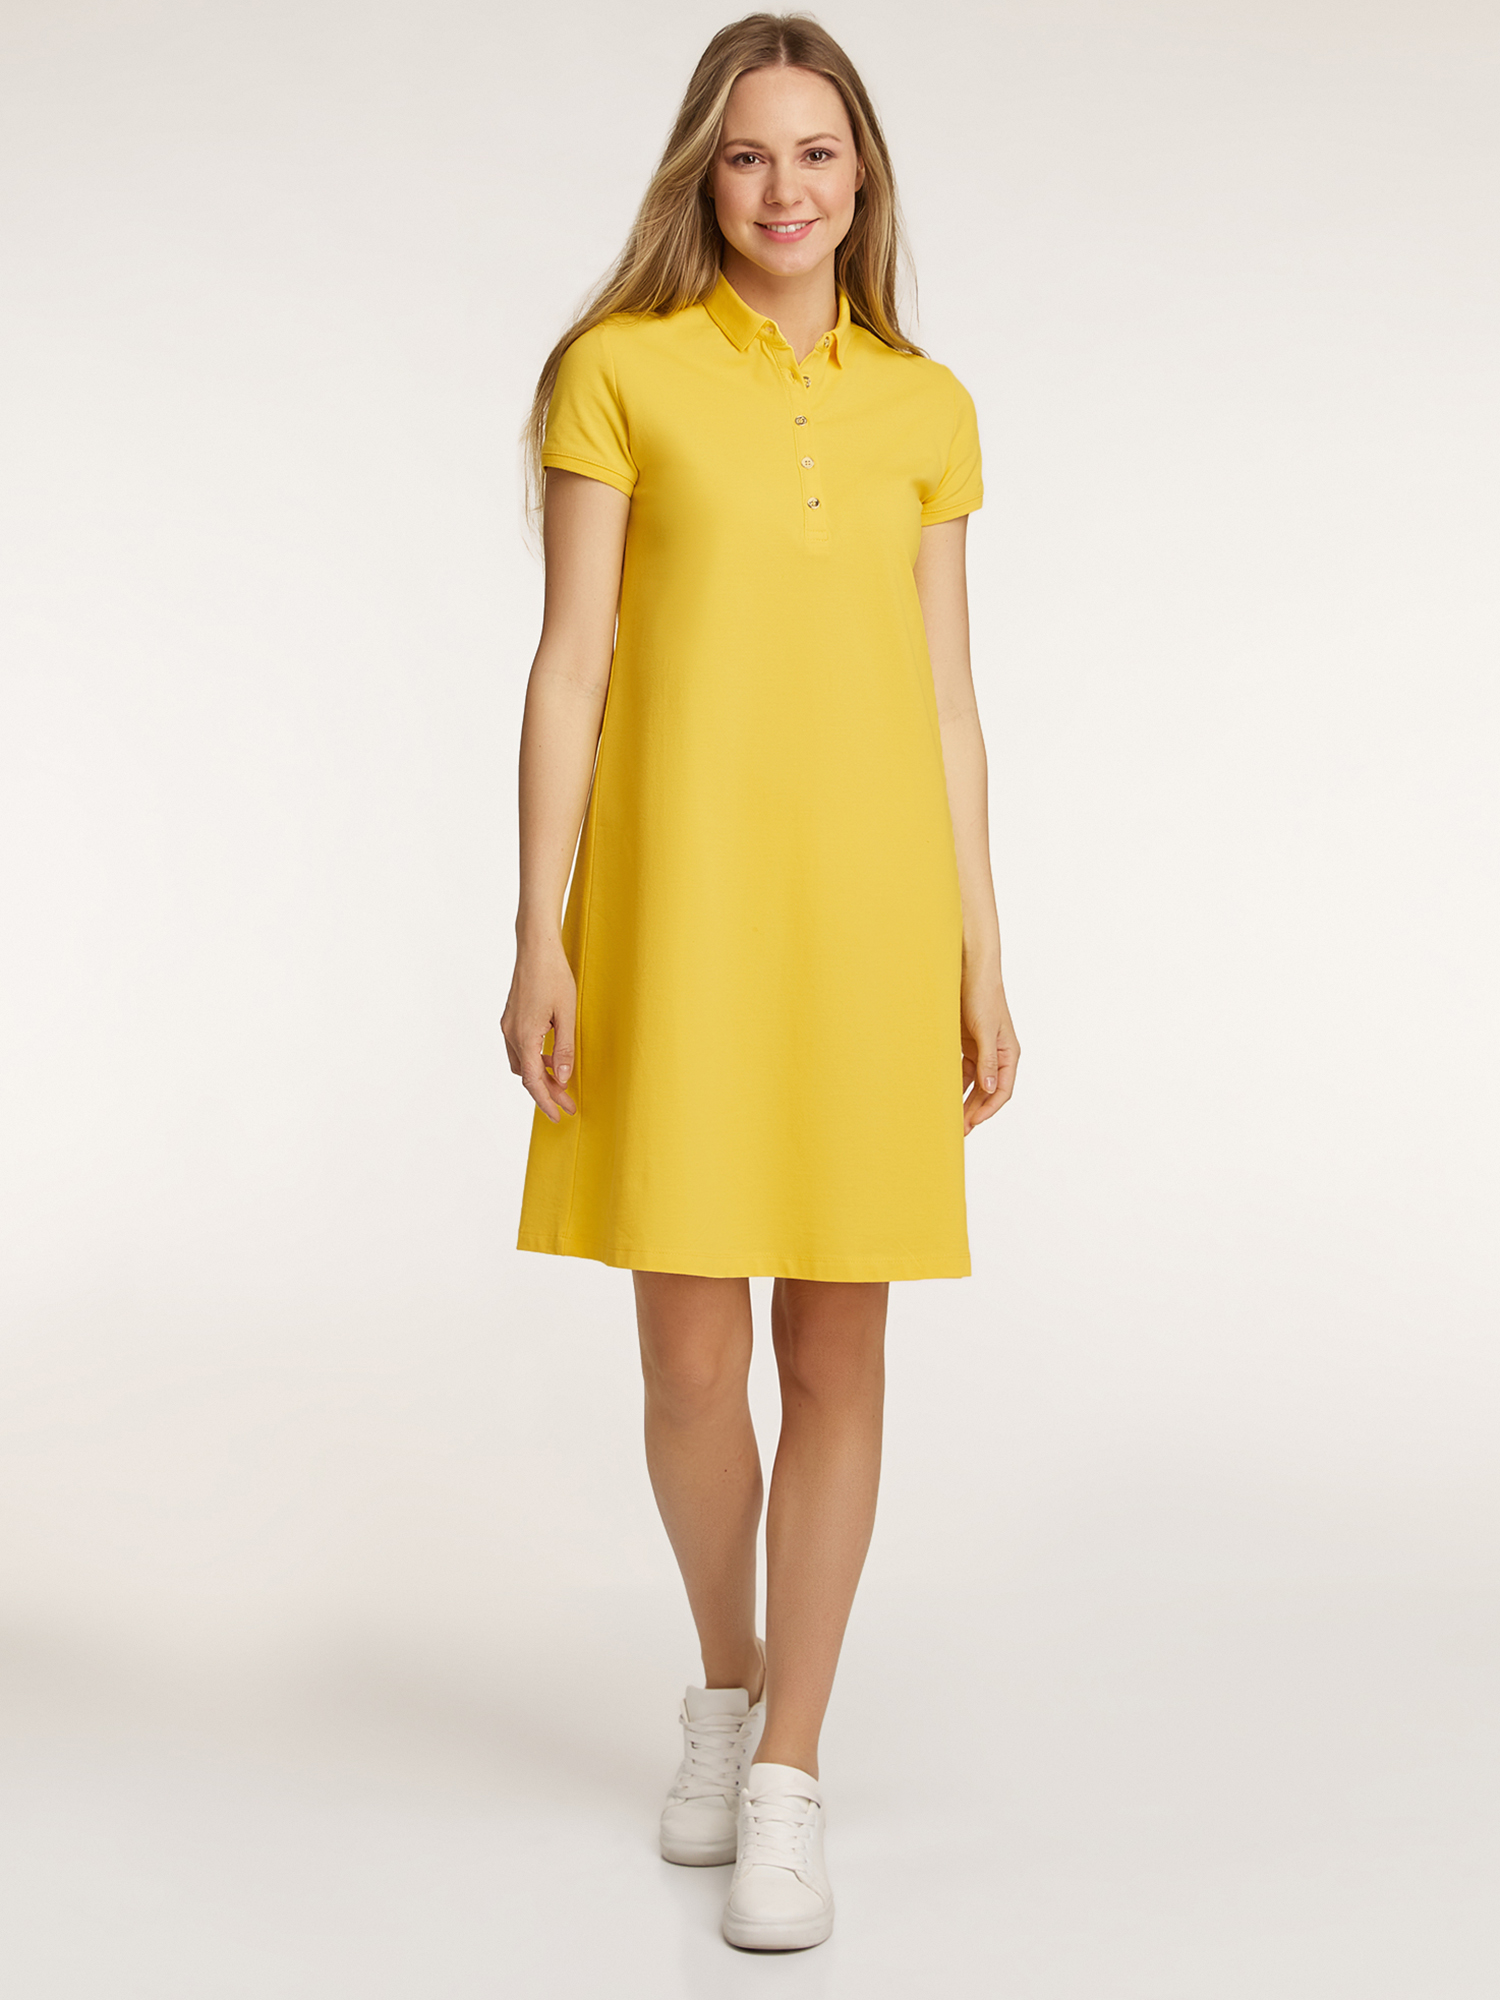 Платье женское oodji 24001118-4B желтое XL